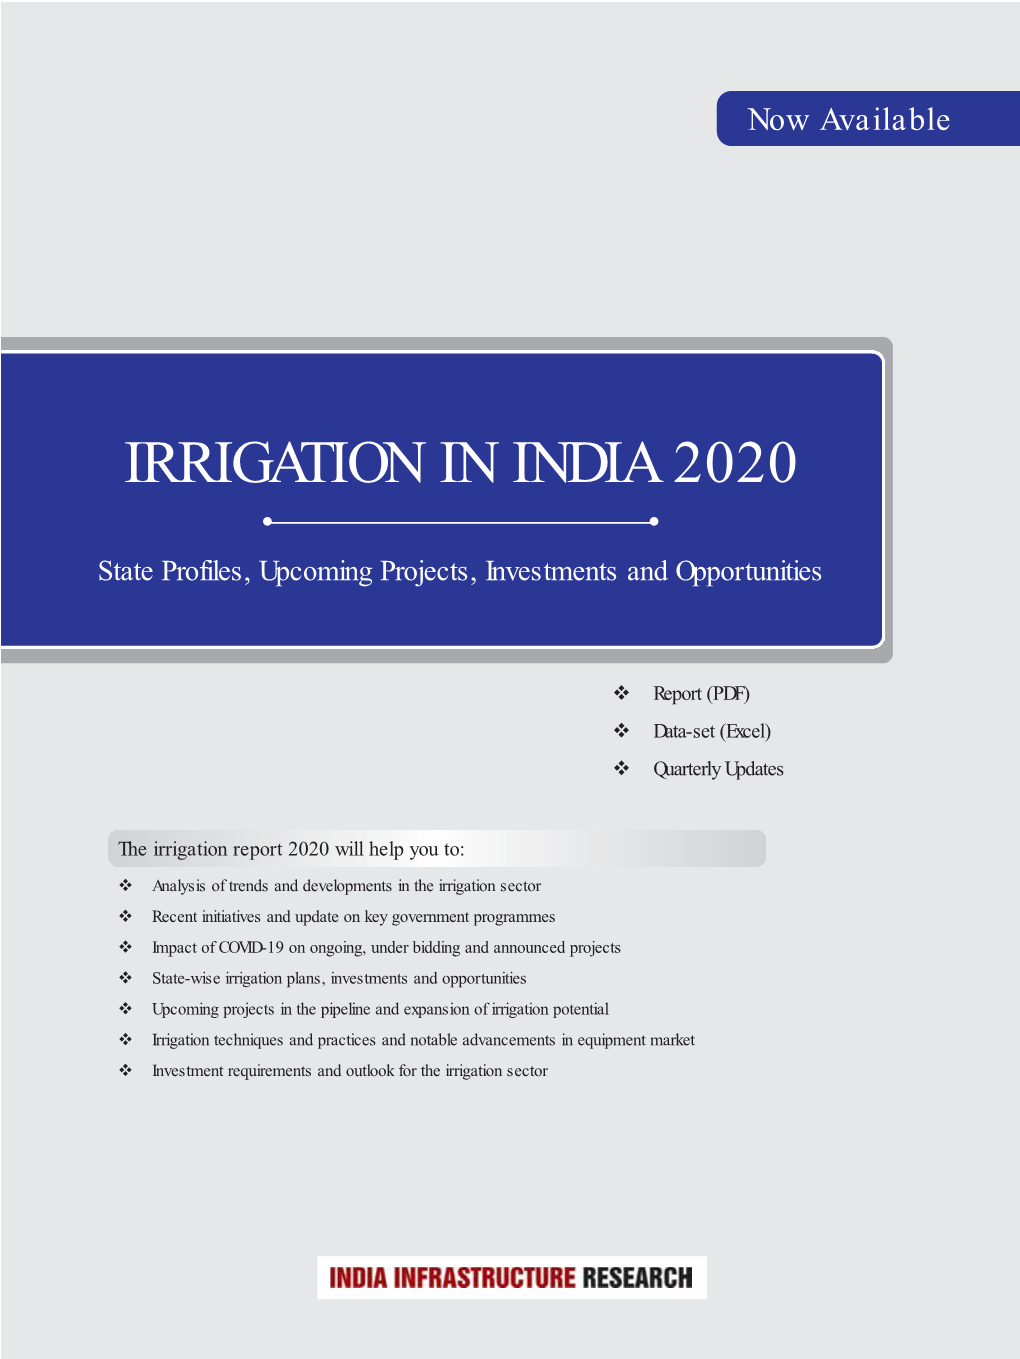 Irrigation in India 2020